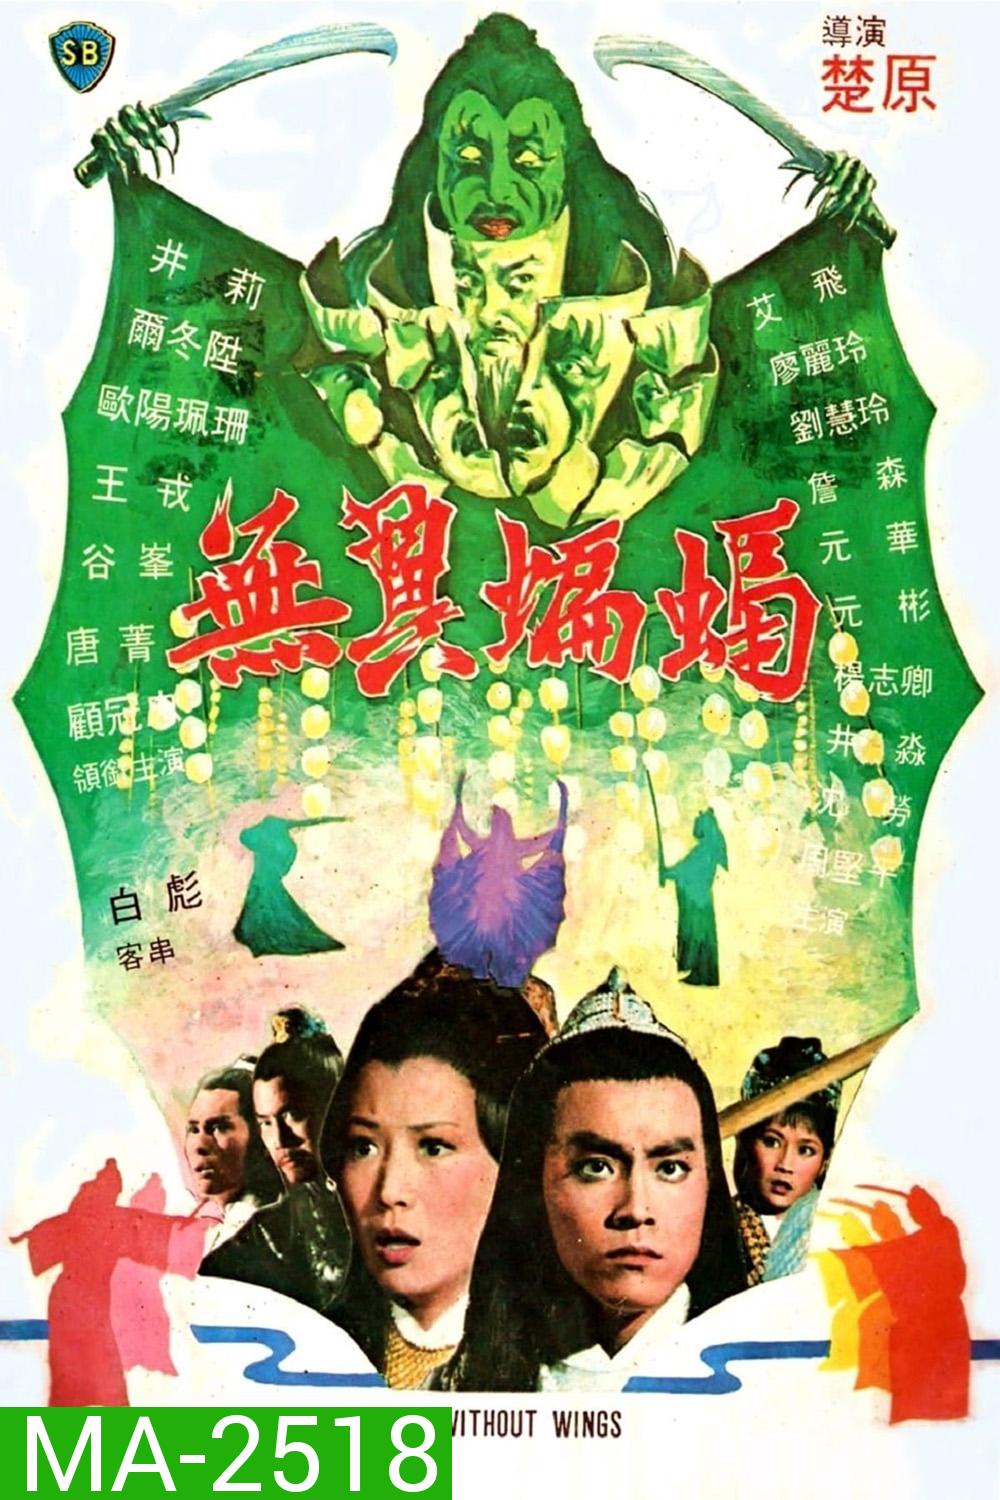 Bat Without Wings [Wu yi bian fu] (1980) ศึกชิงดาบคู่ค้างคาวทอง